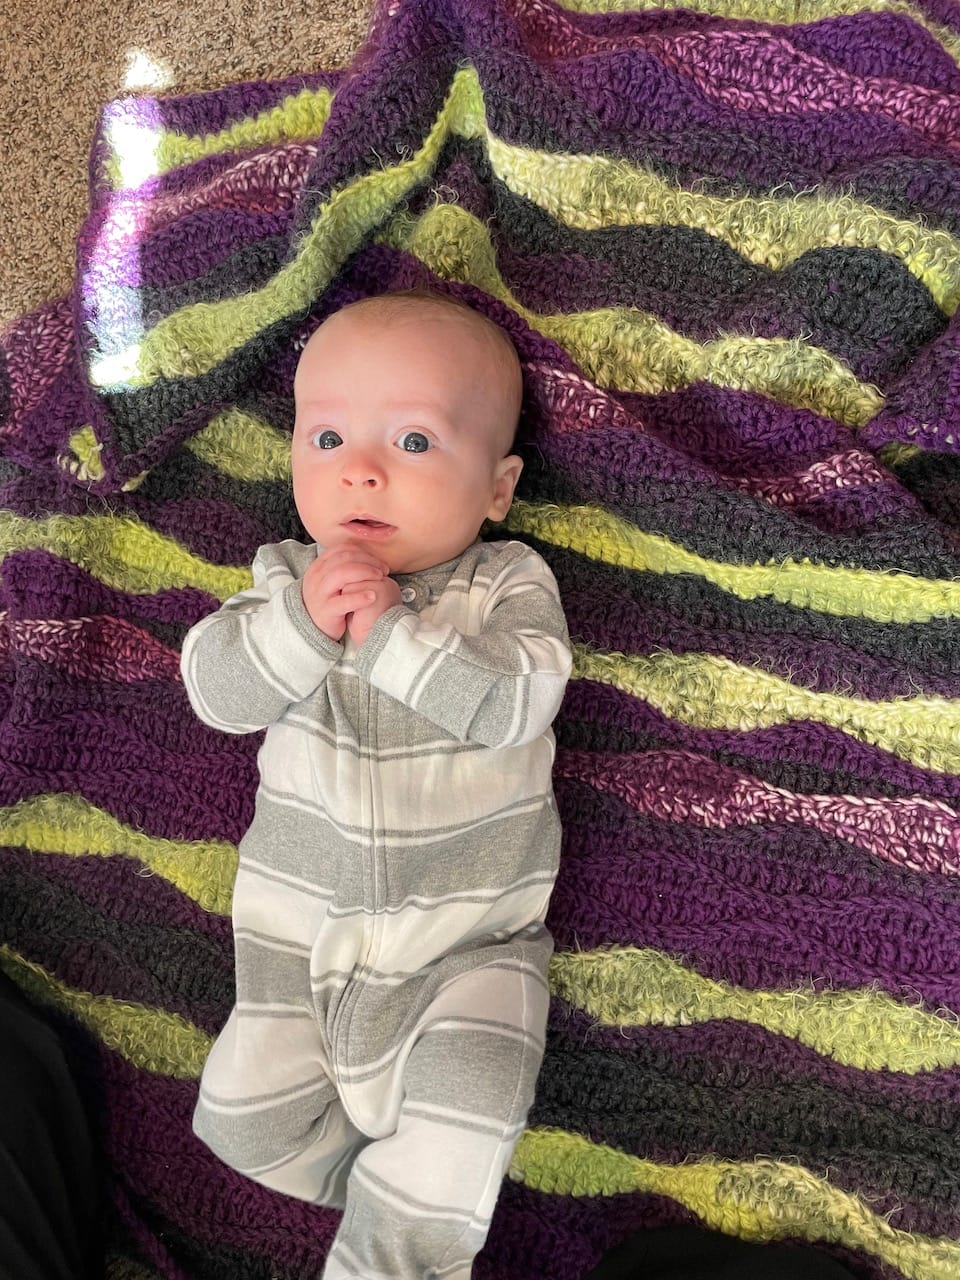 Birthday Baby on Crocheted Blanket